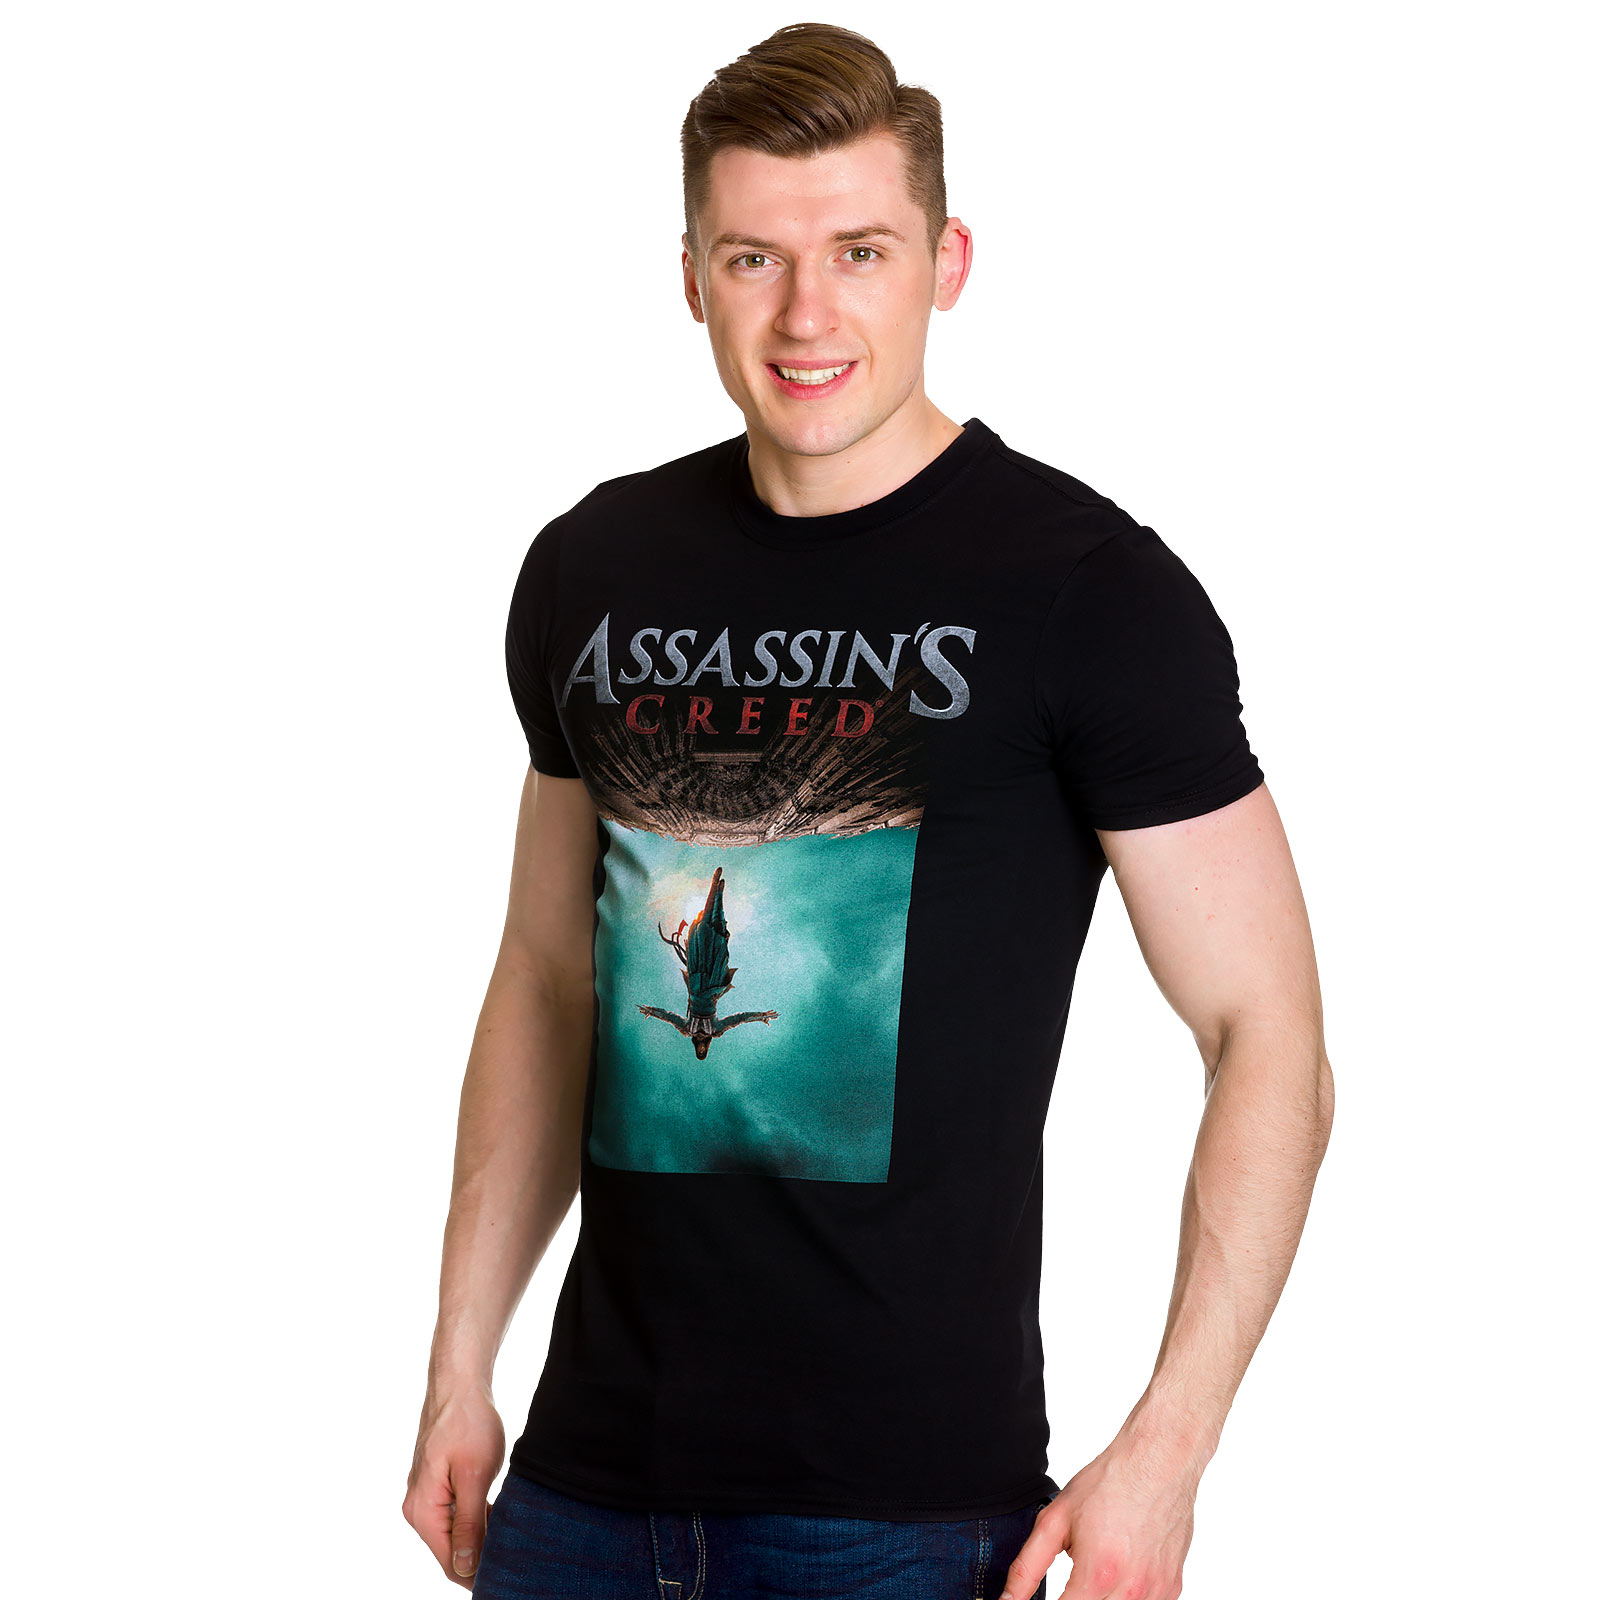 Assassins Creed - Movie Poster T-Shirt black